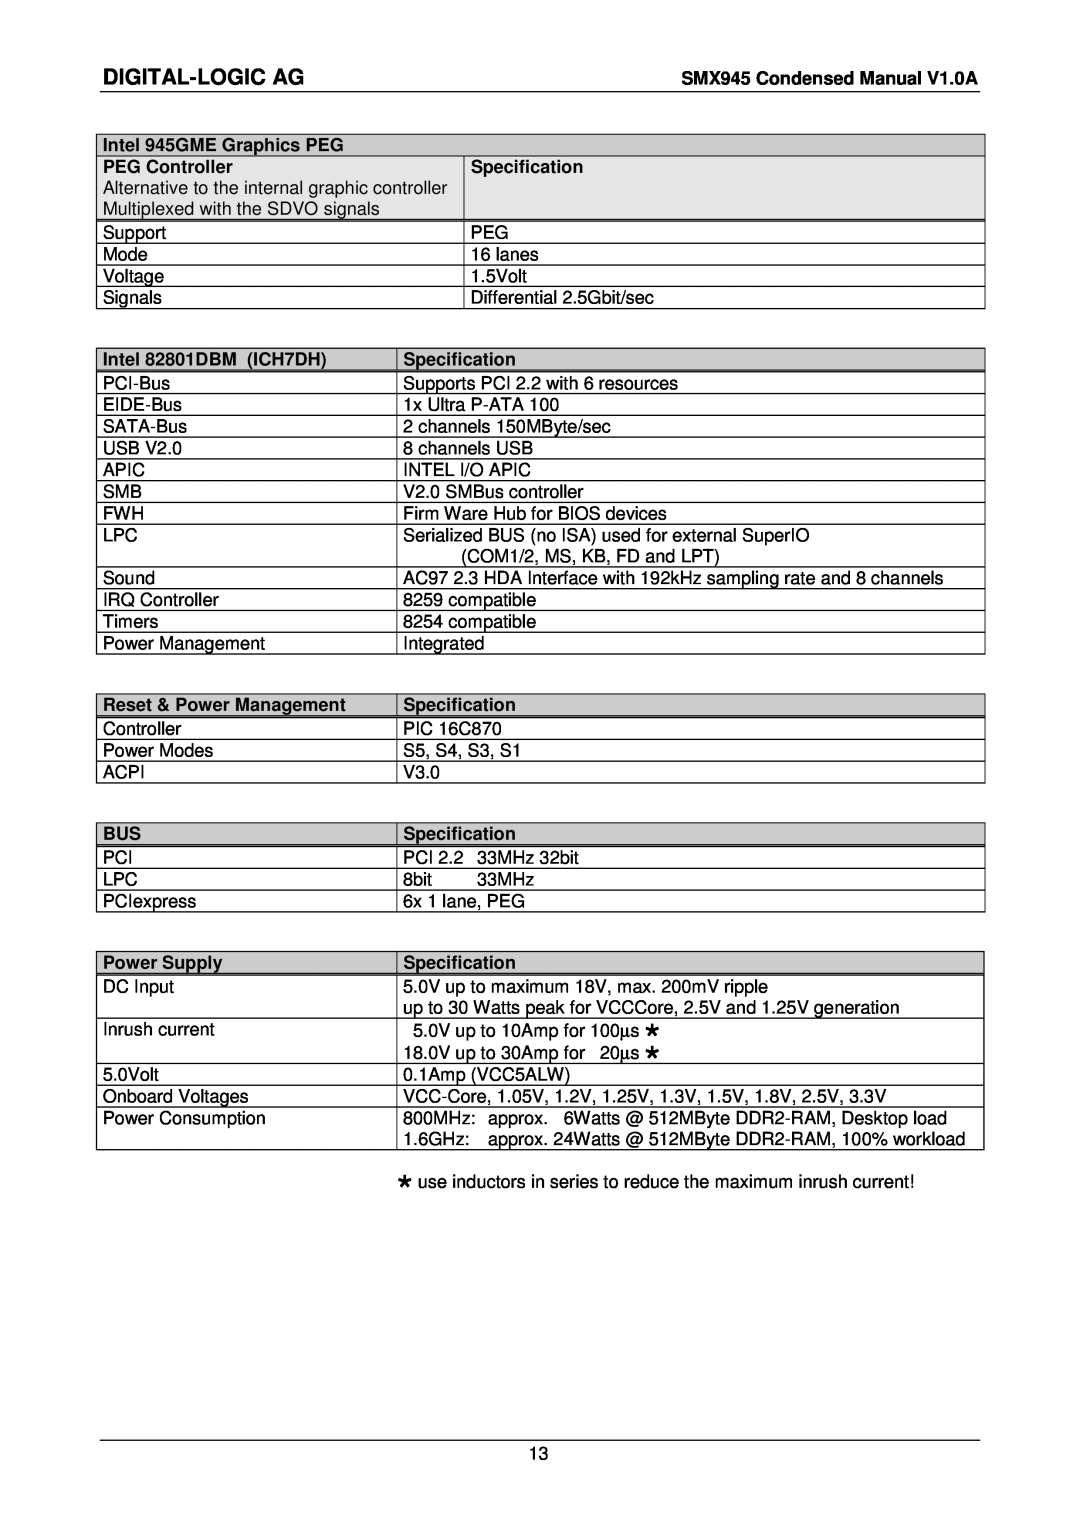 Compaq SMX945 user manual Digital-Logic Ag 